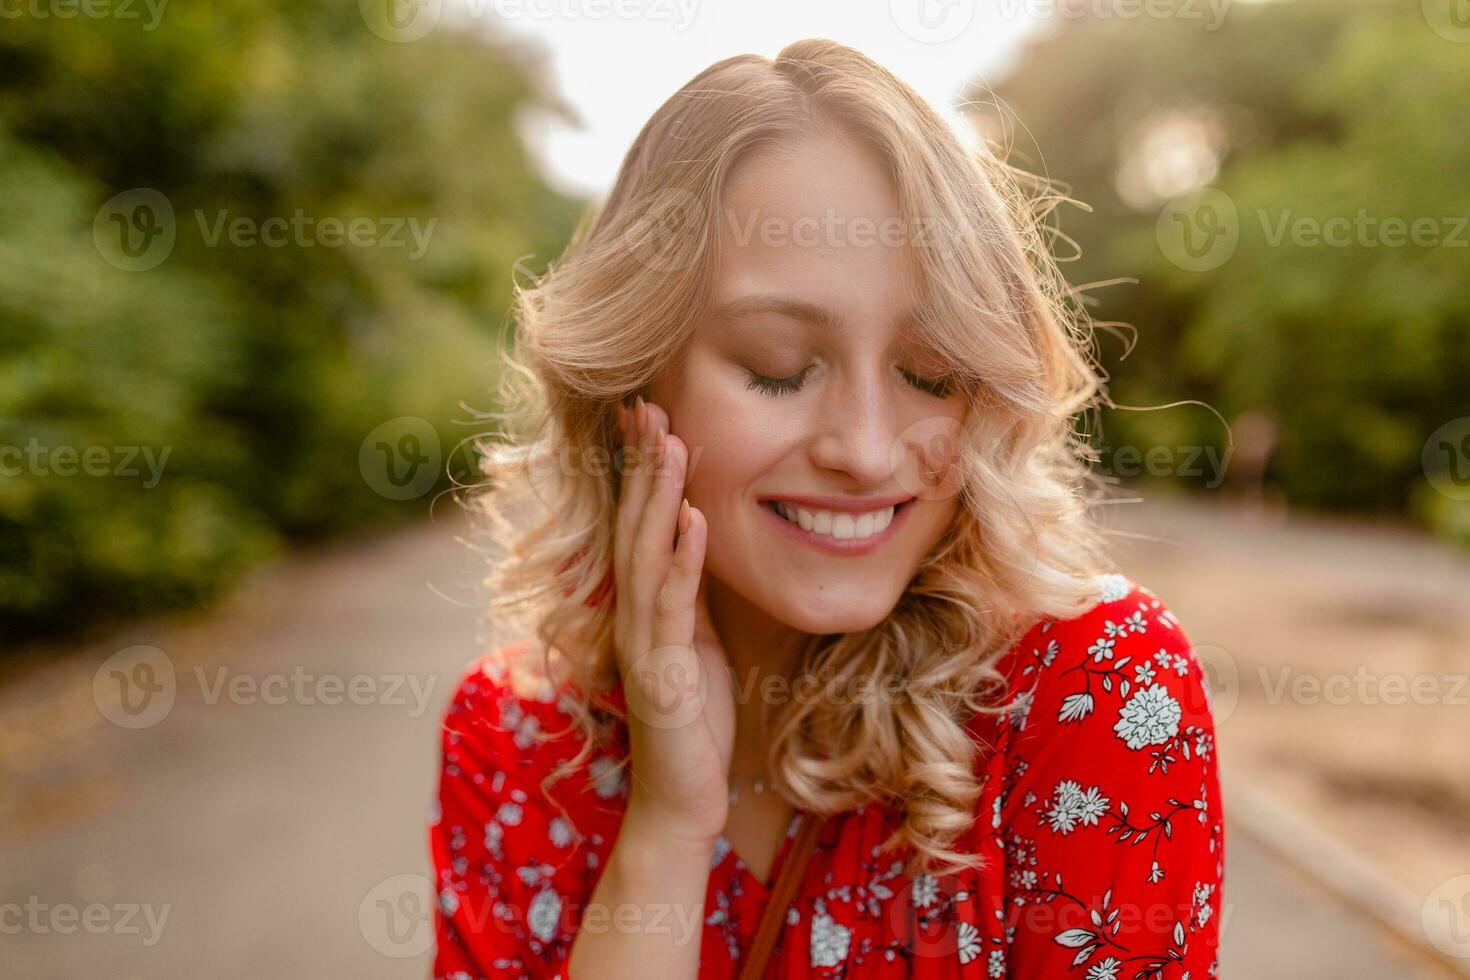 attraktiv stilvoll blond lächelnd Frau im Stroh rot Bluse Sommer- Mode foto